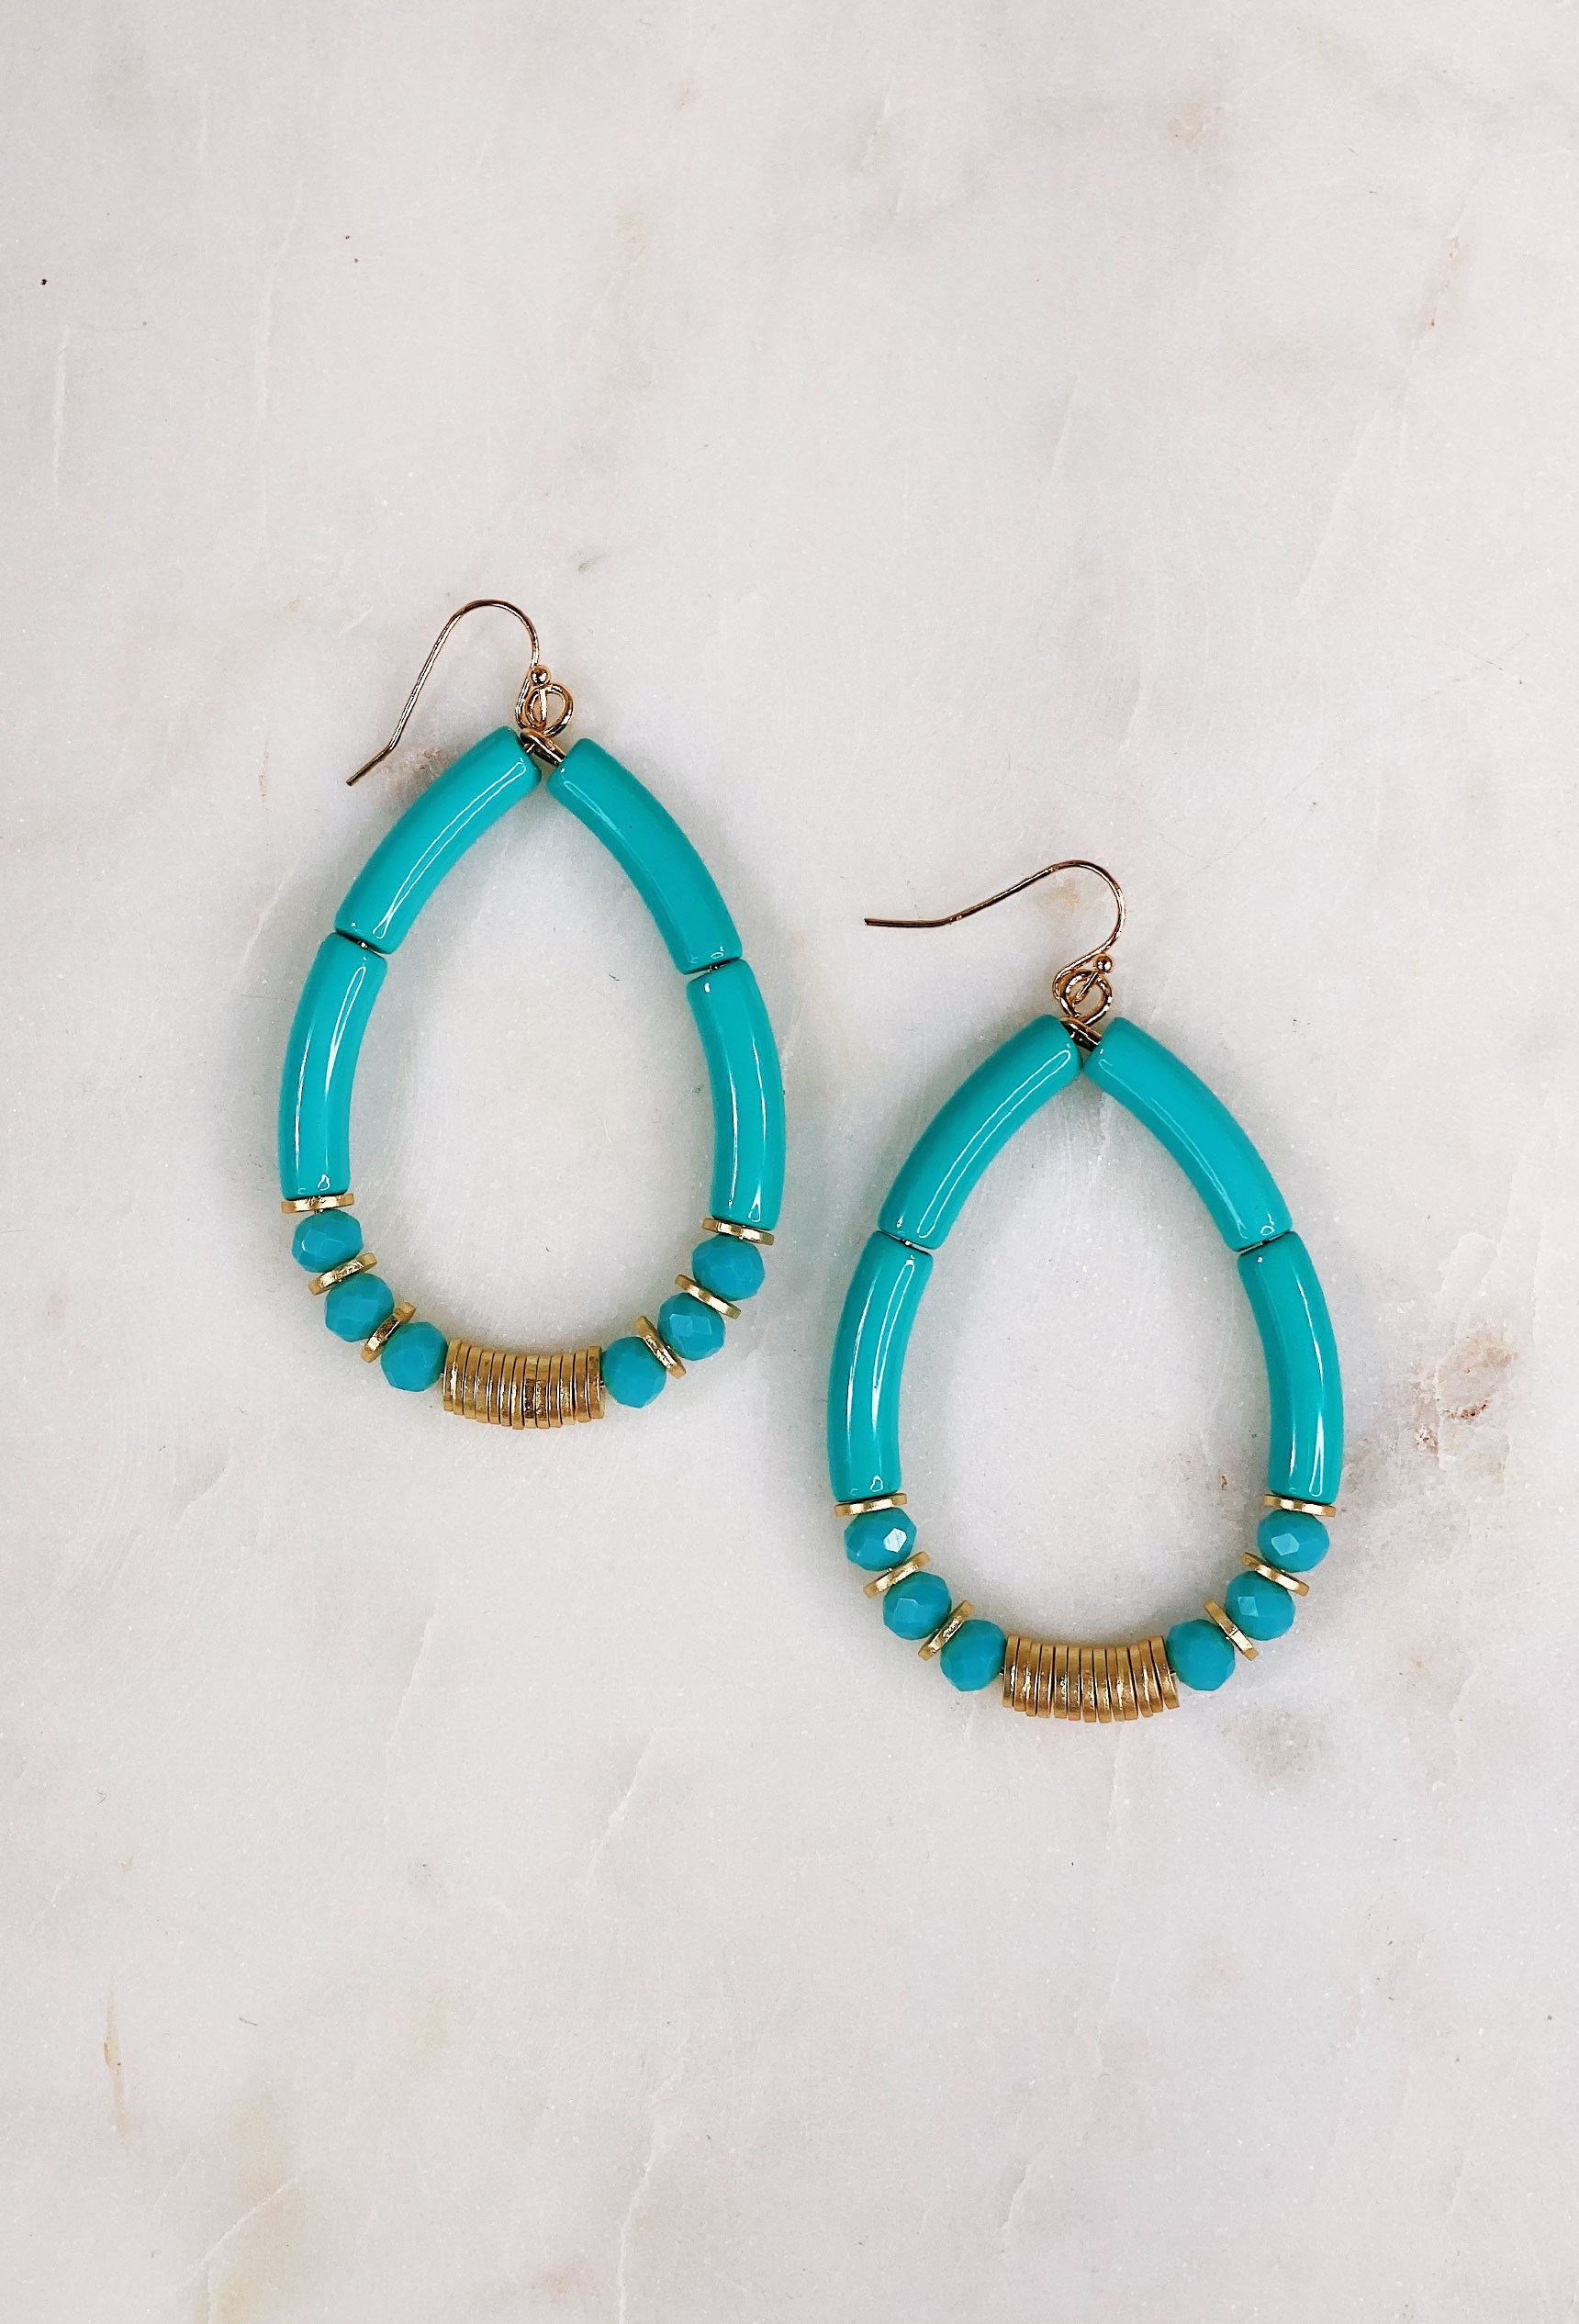 Happiest Here Acrylic Earrings in Turquoise, teardrop shape, acrylic beads, gold beads